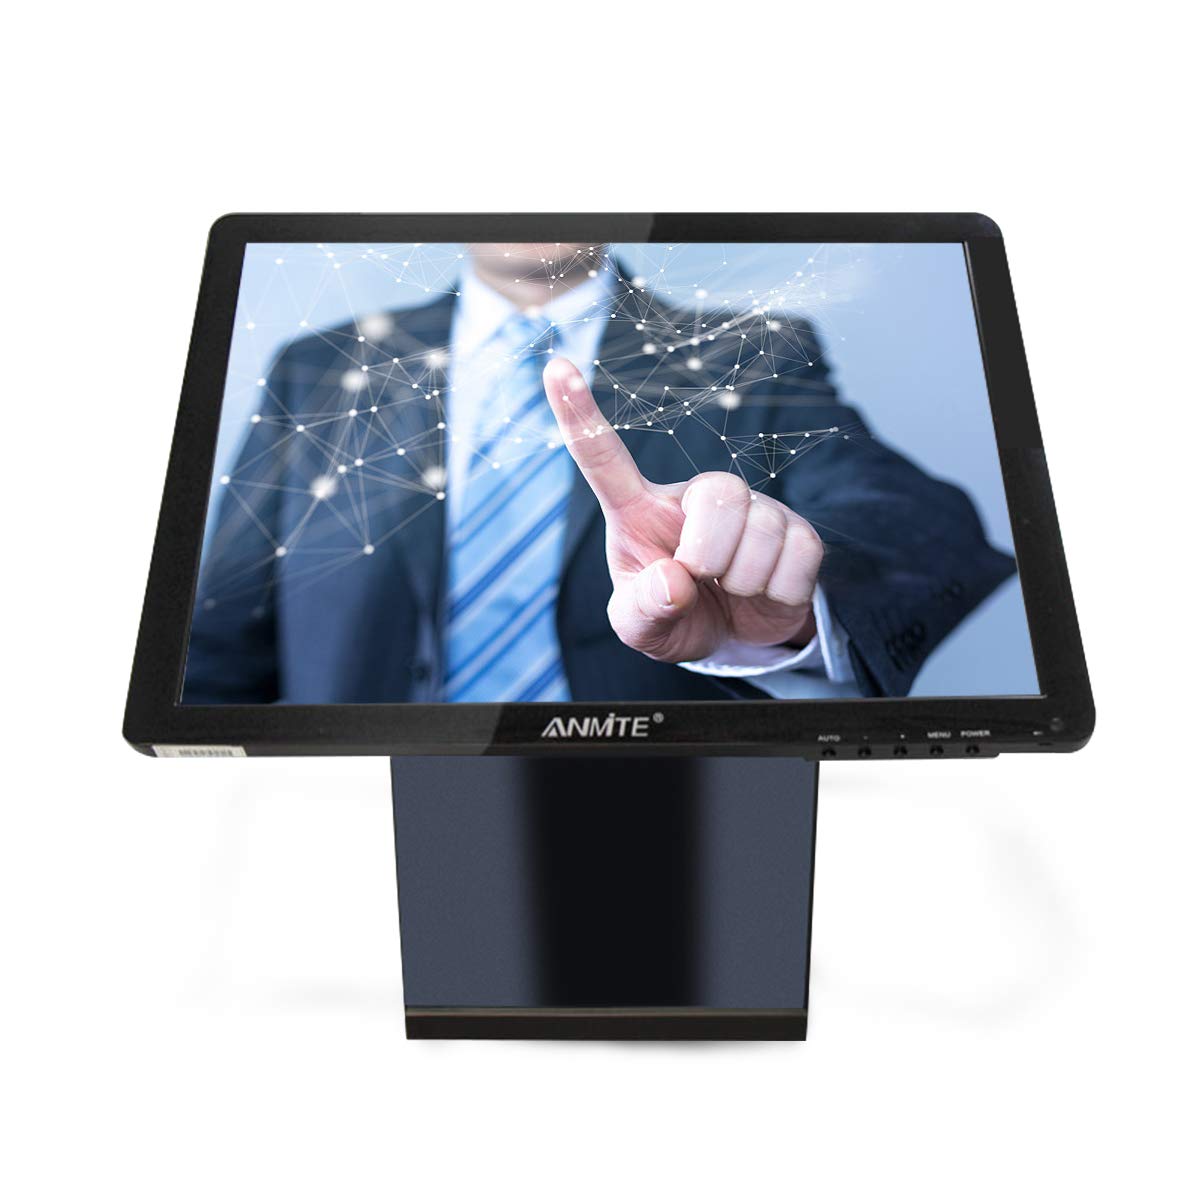 Anmite Desktop Touchscreen LCD Monitor - 17-Inch - Capacitance TouchMonitor Black HDMI/VGA